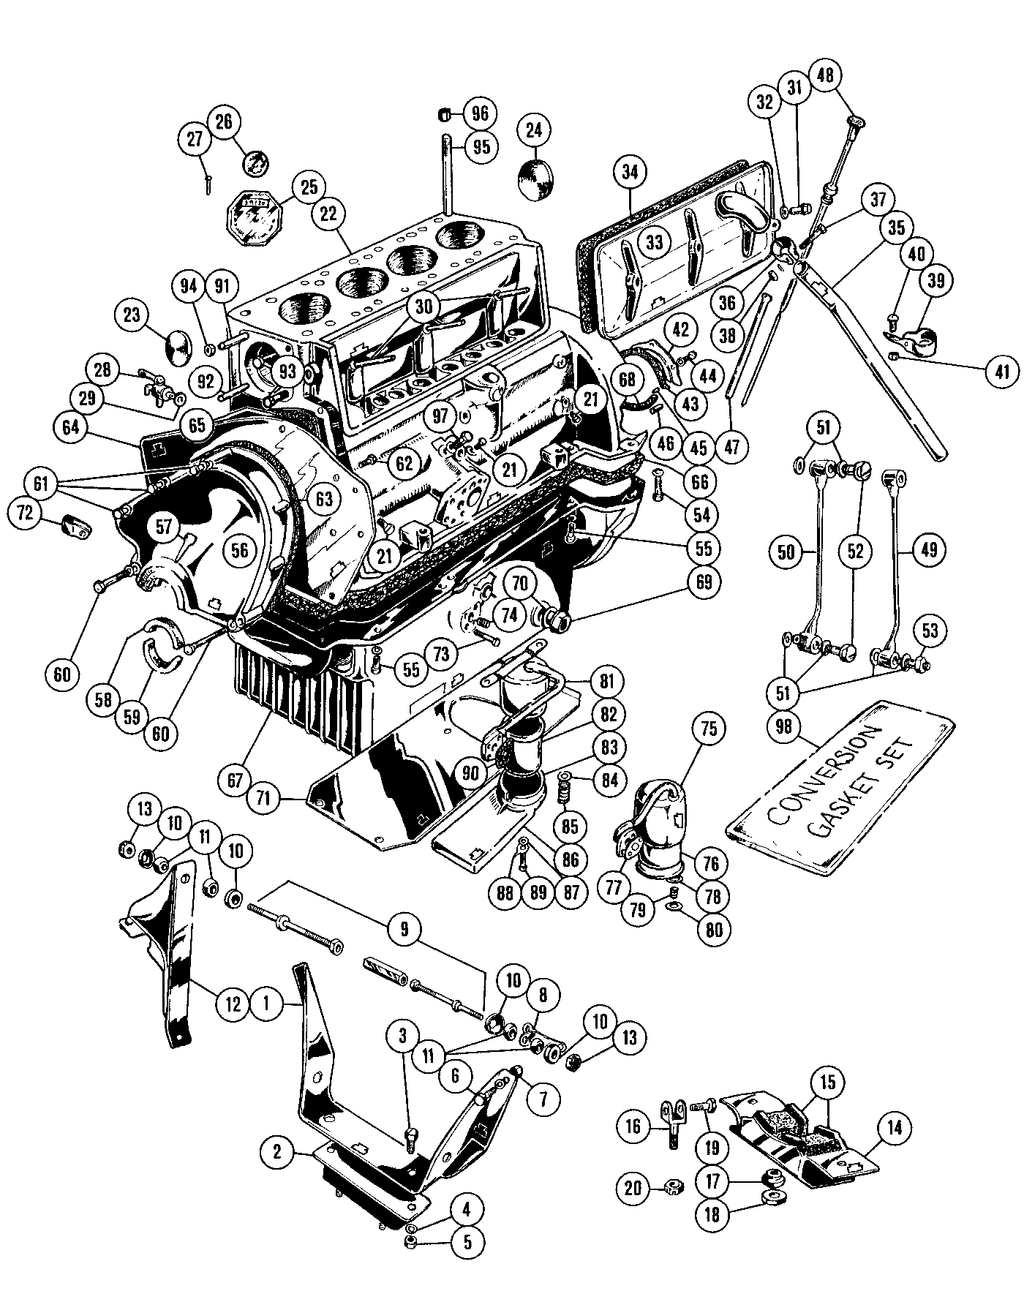 MGTD-TF 1949-1955 - Engine mounts | Webshop Anglo Parts - Engine - 1